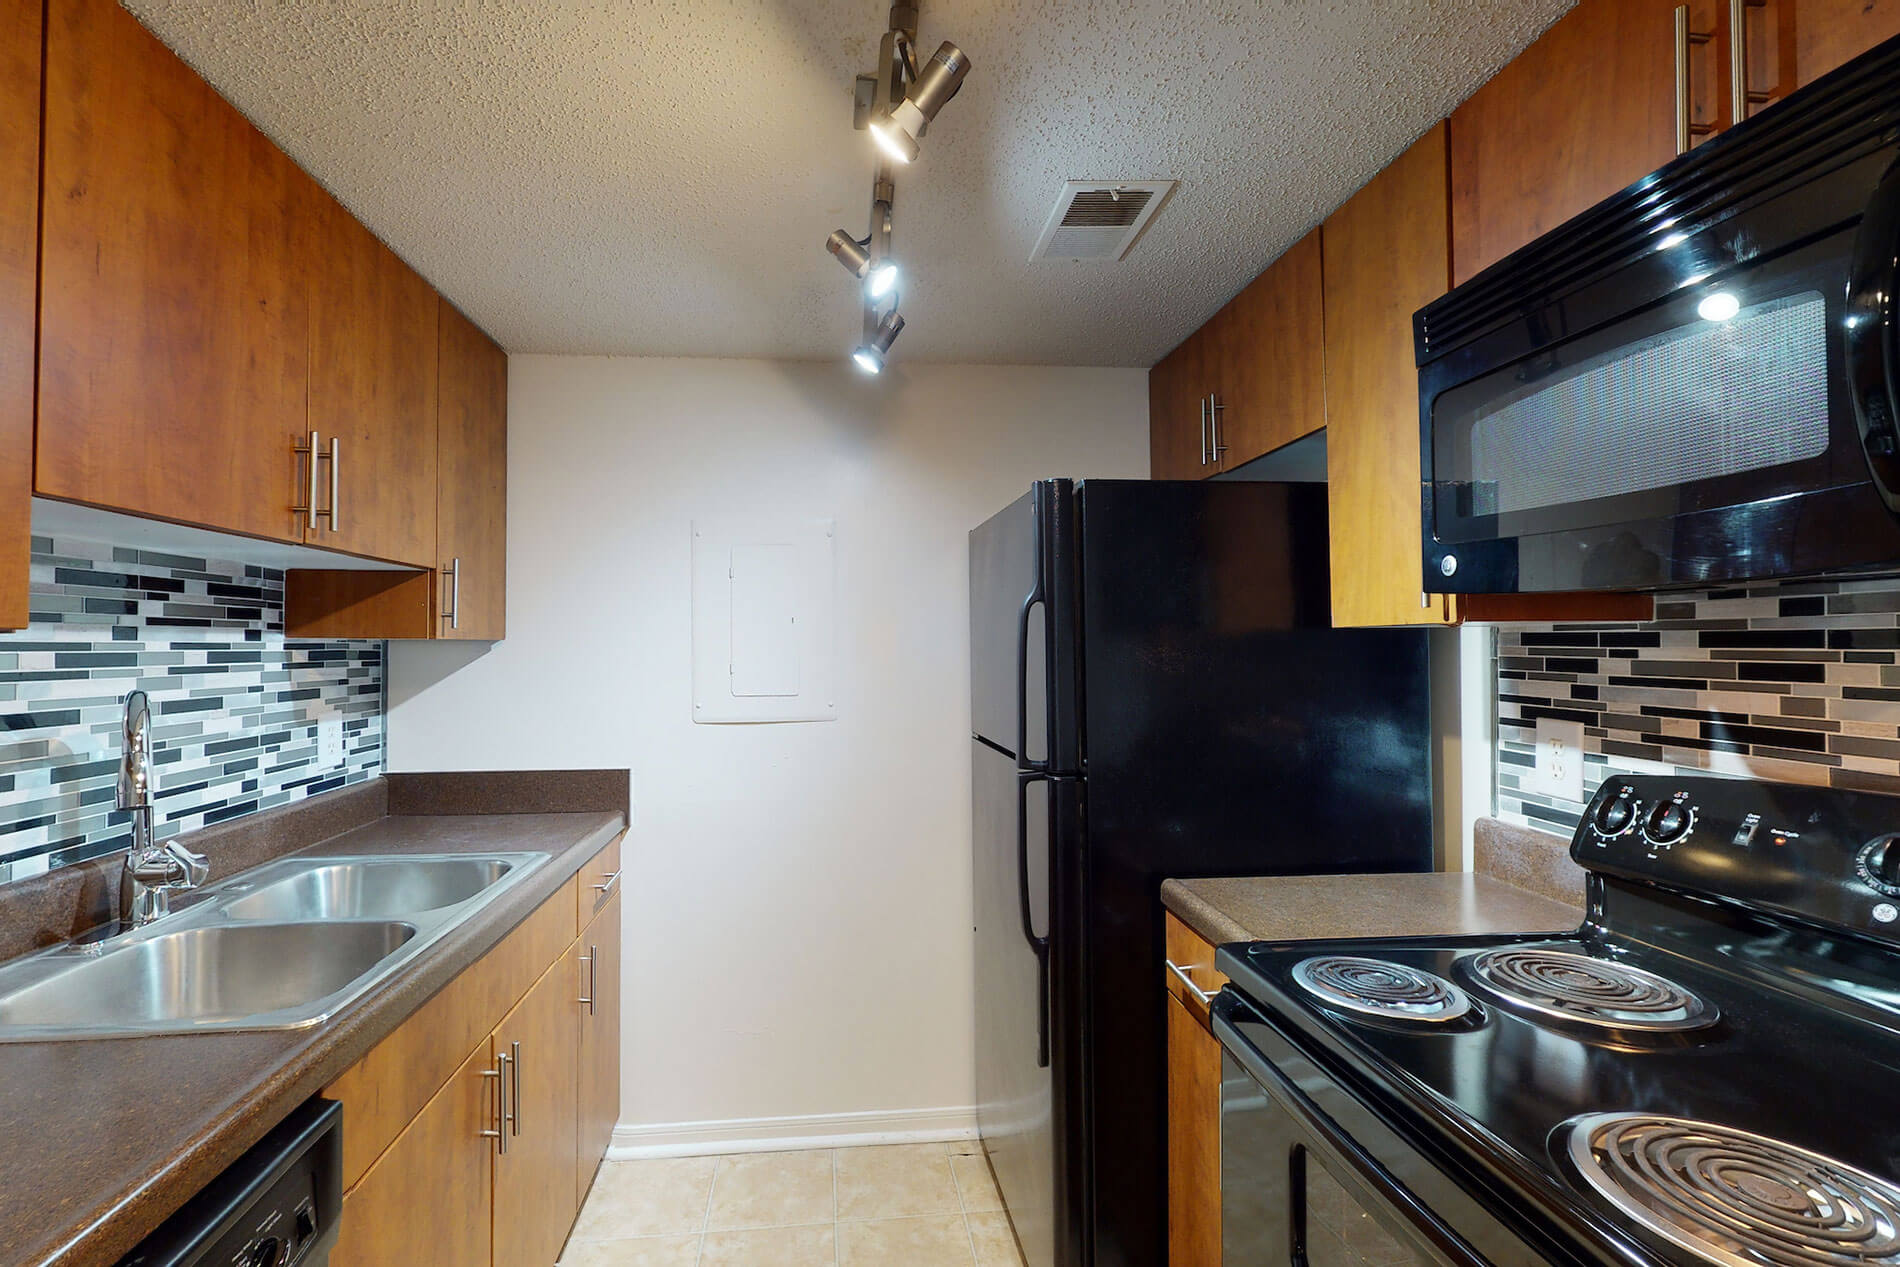 Breckenridge Apartment kitchen interior